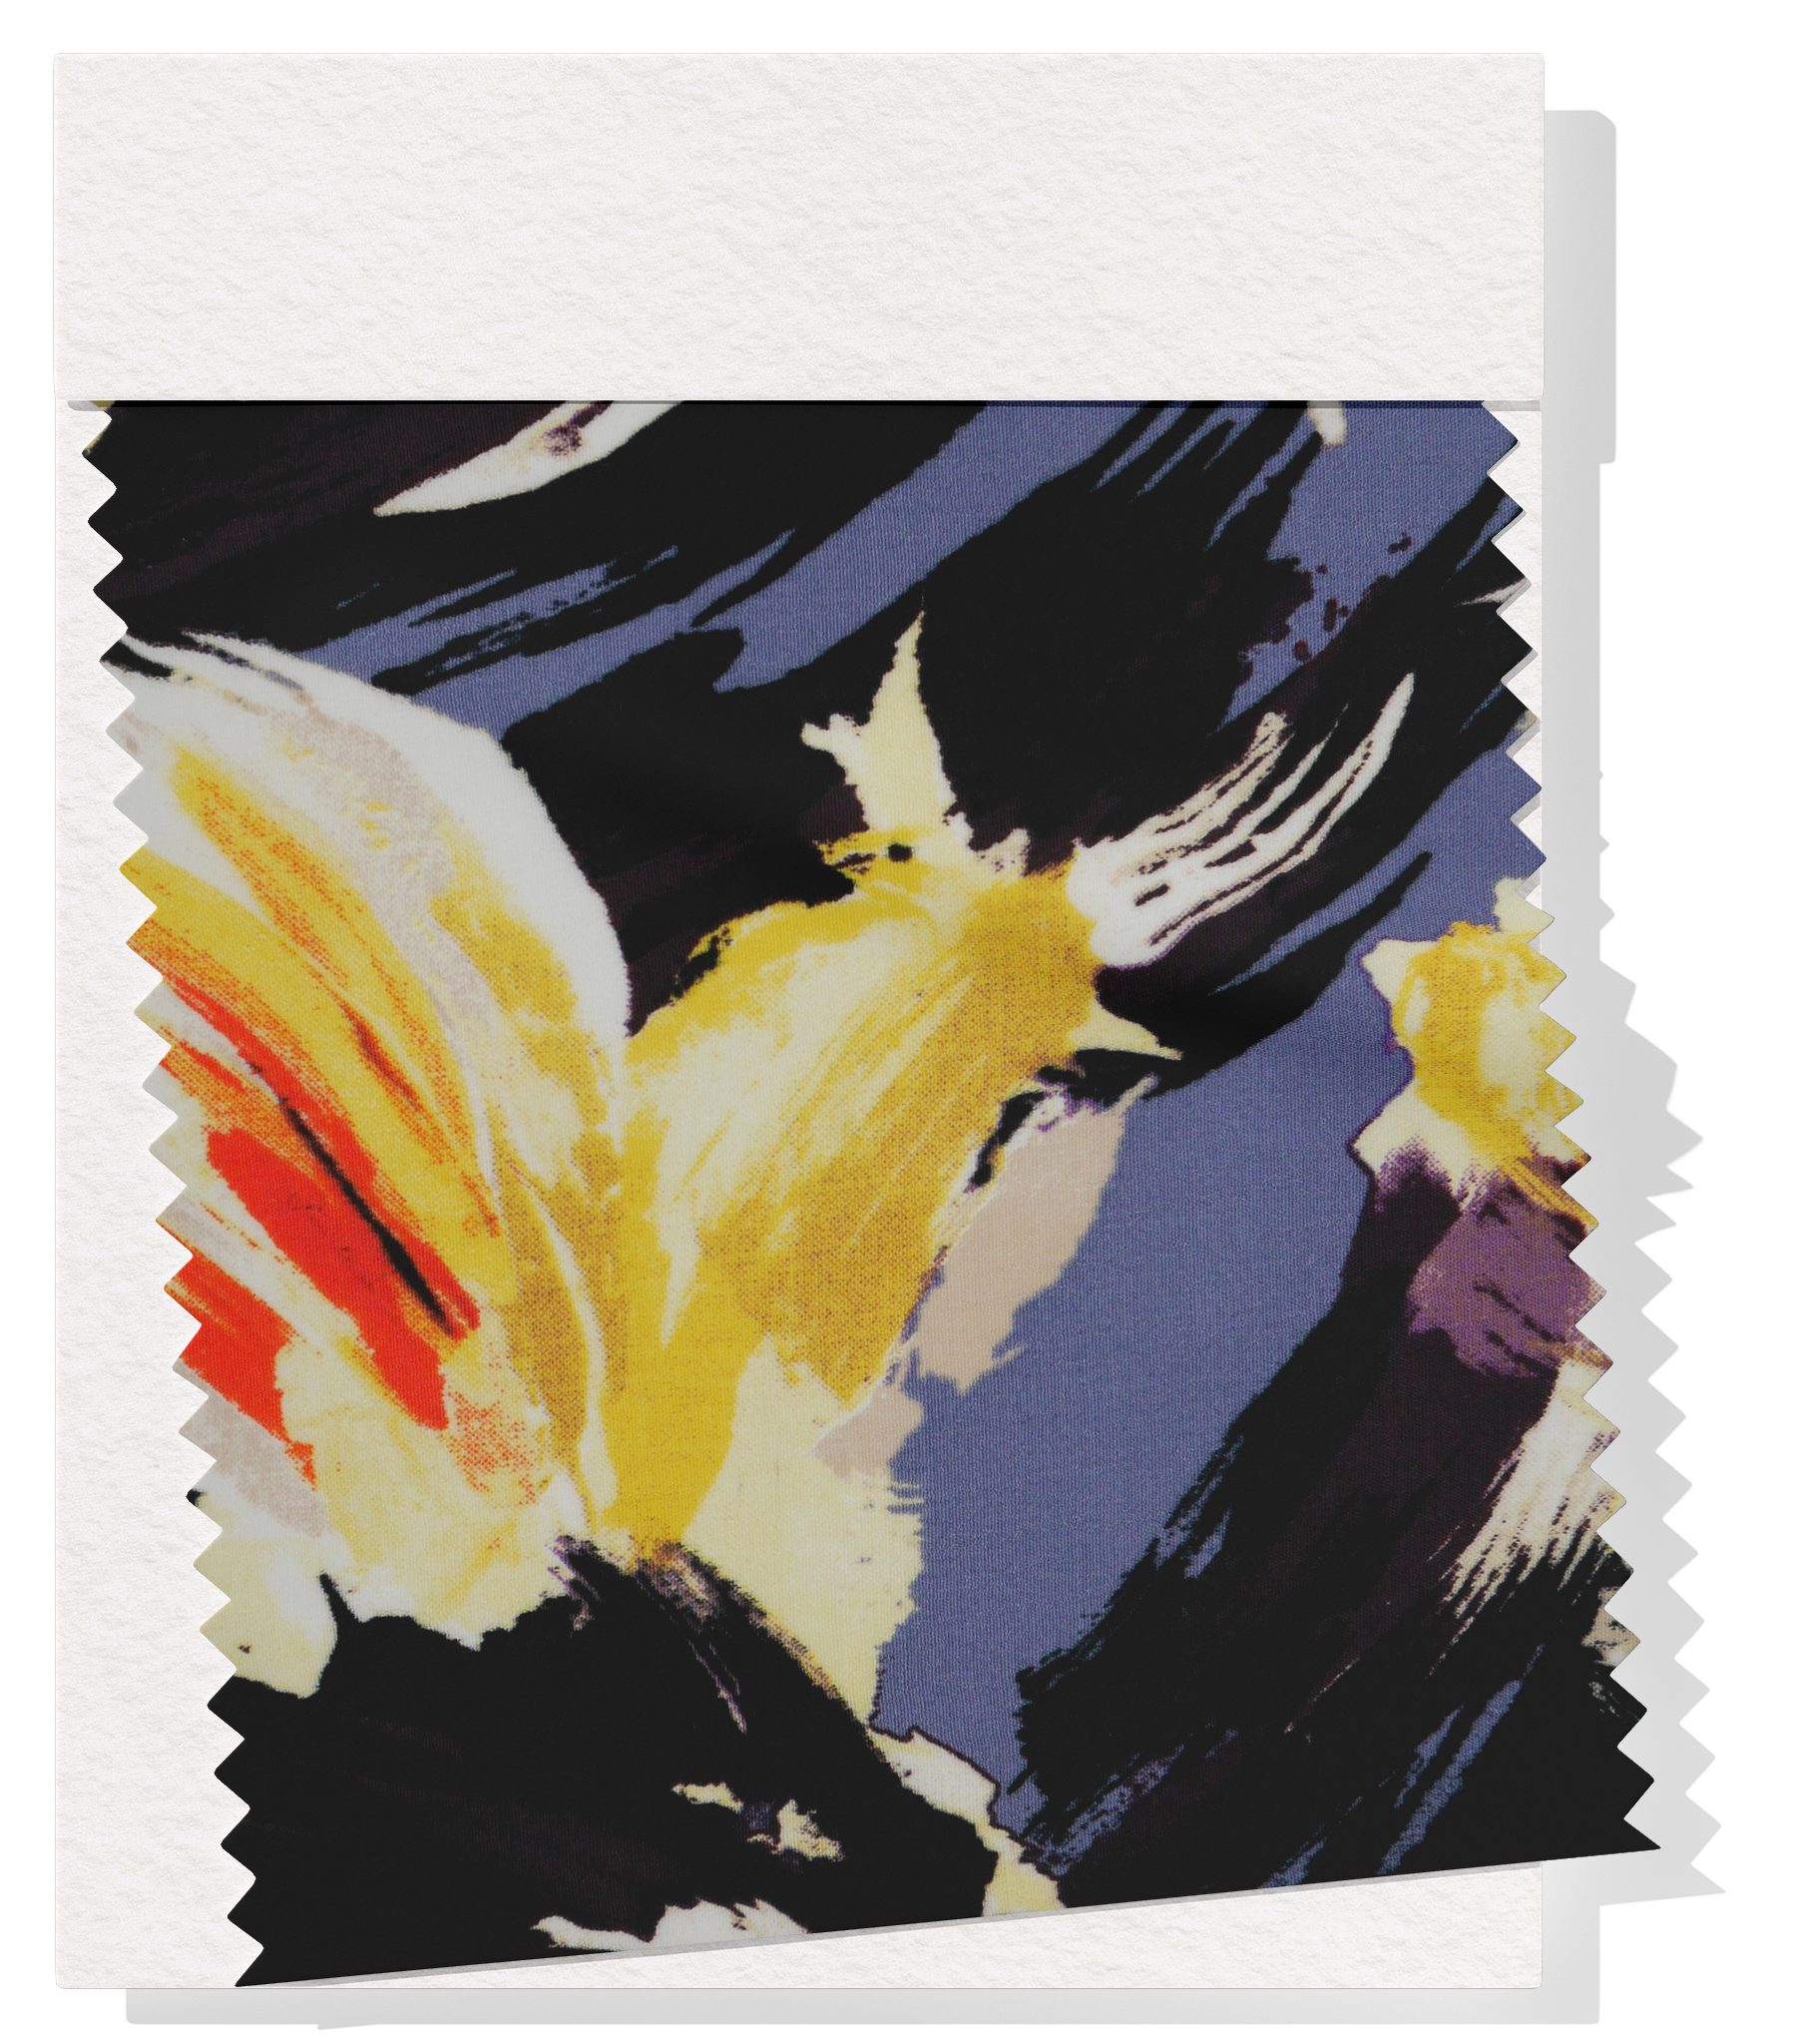 Viscose/ Rayon Crepe Print $22.00p/m - Blue, Yellow & Orange